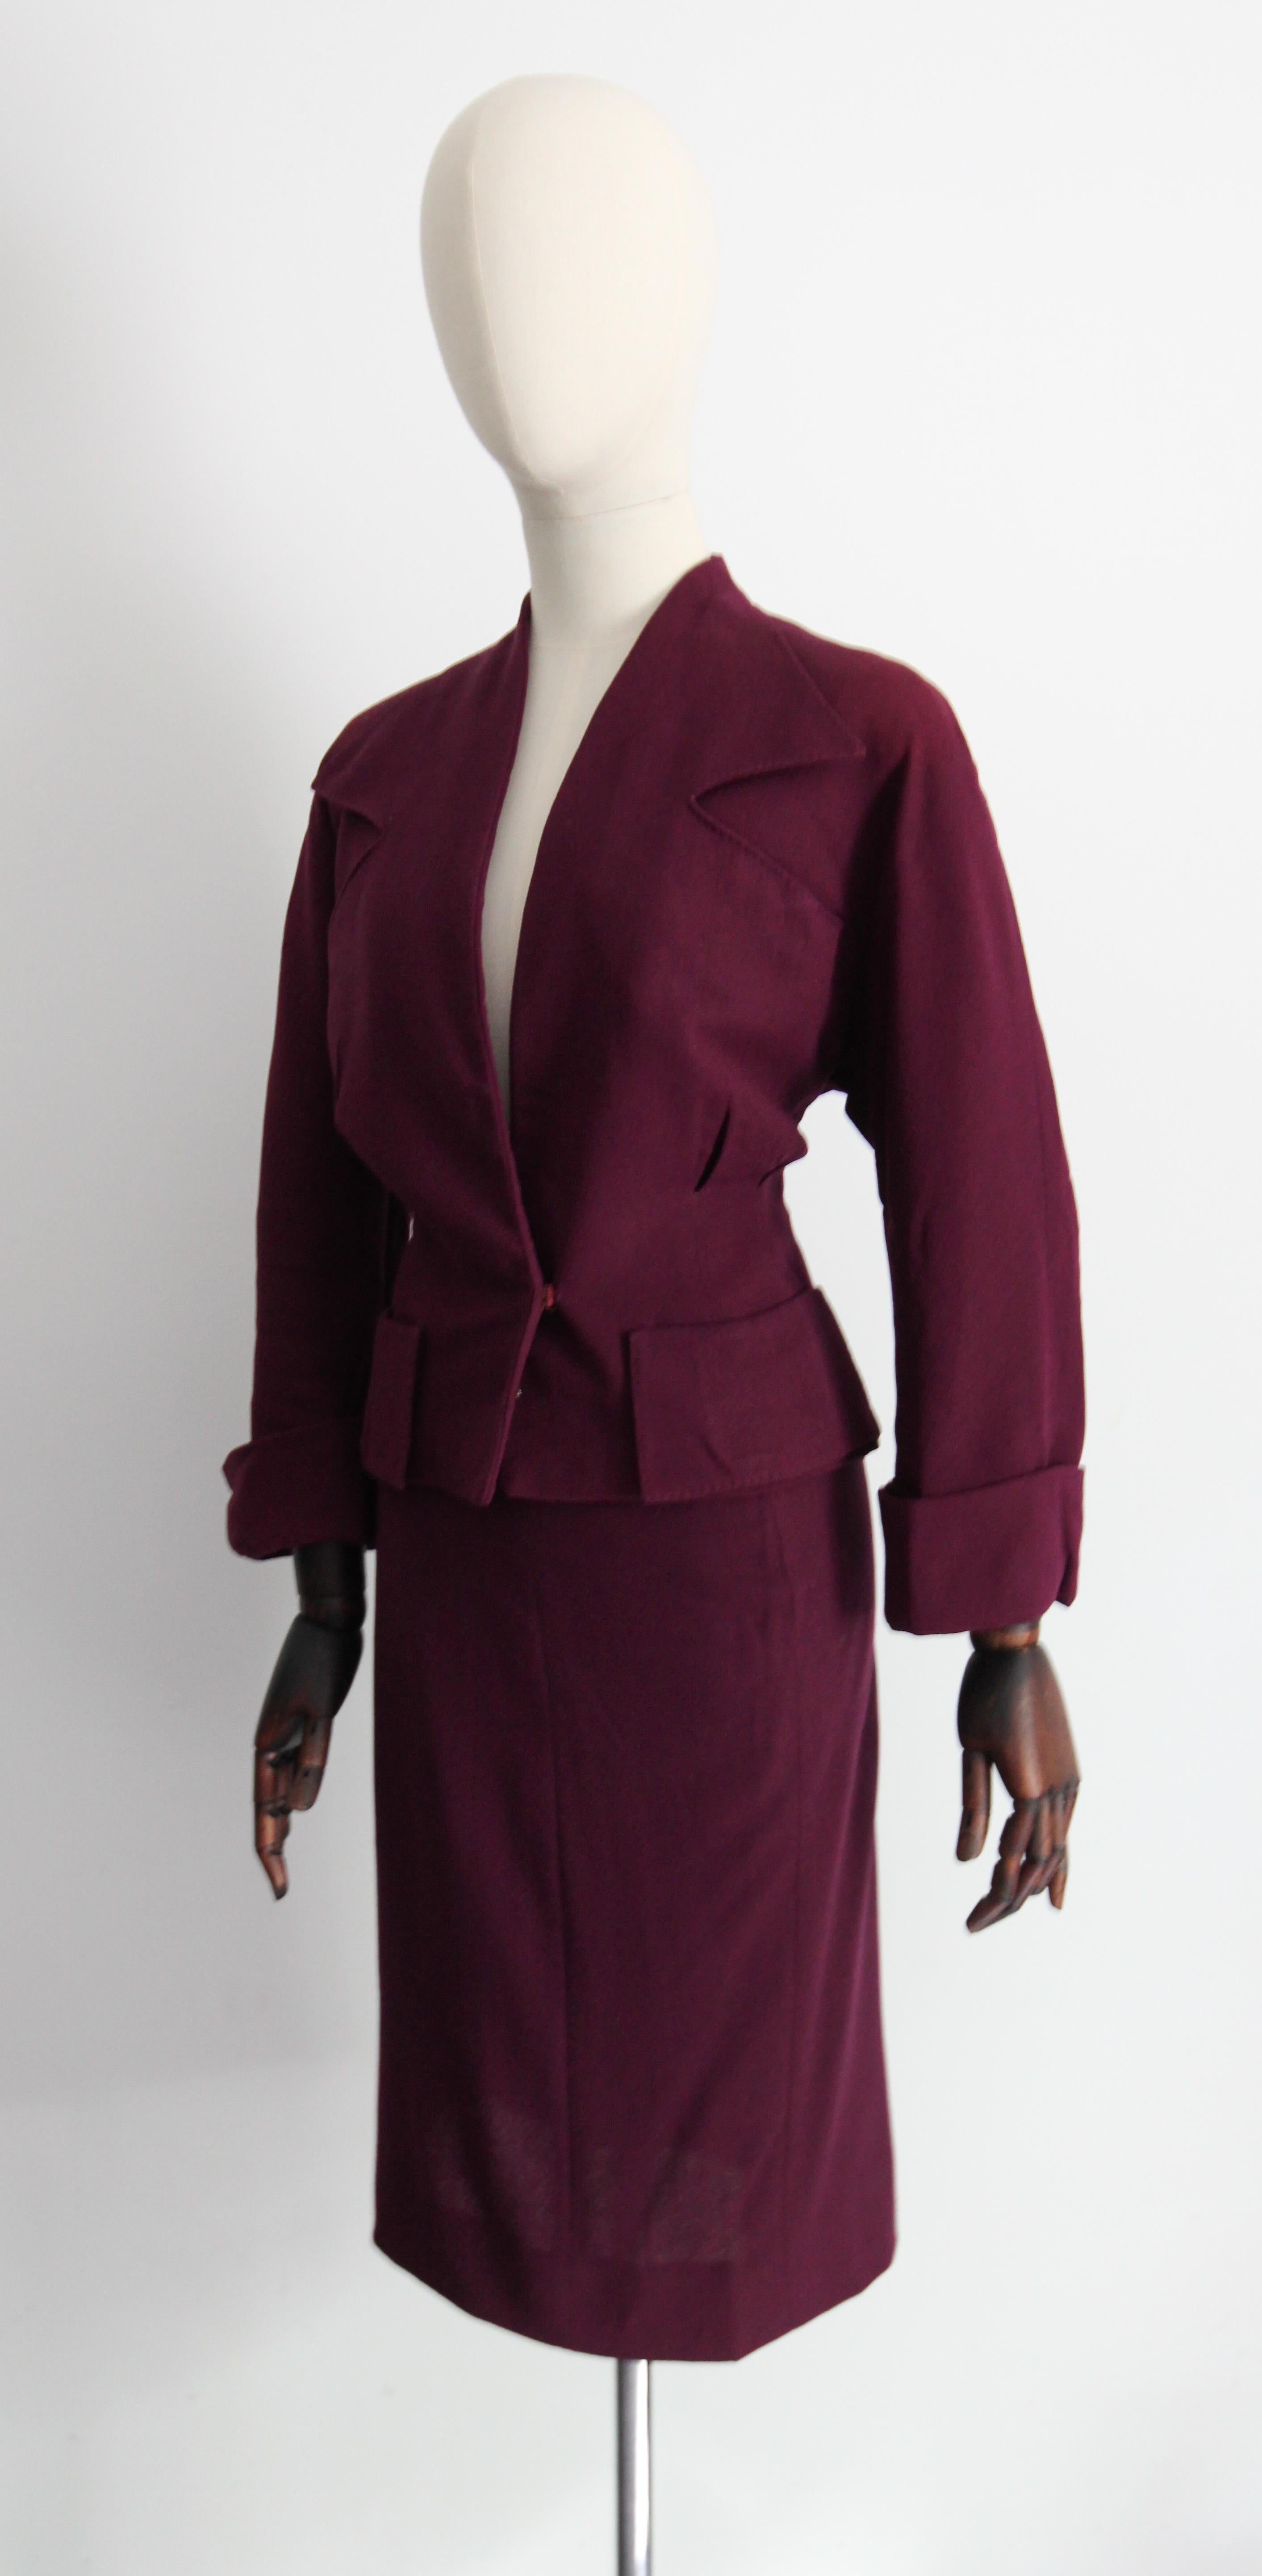 Vintage 1940's plum wool crepe skirt suit tailored burgundy suit UK 8-10 US 4-6 For Sale 2